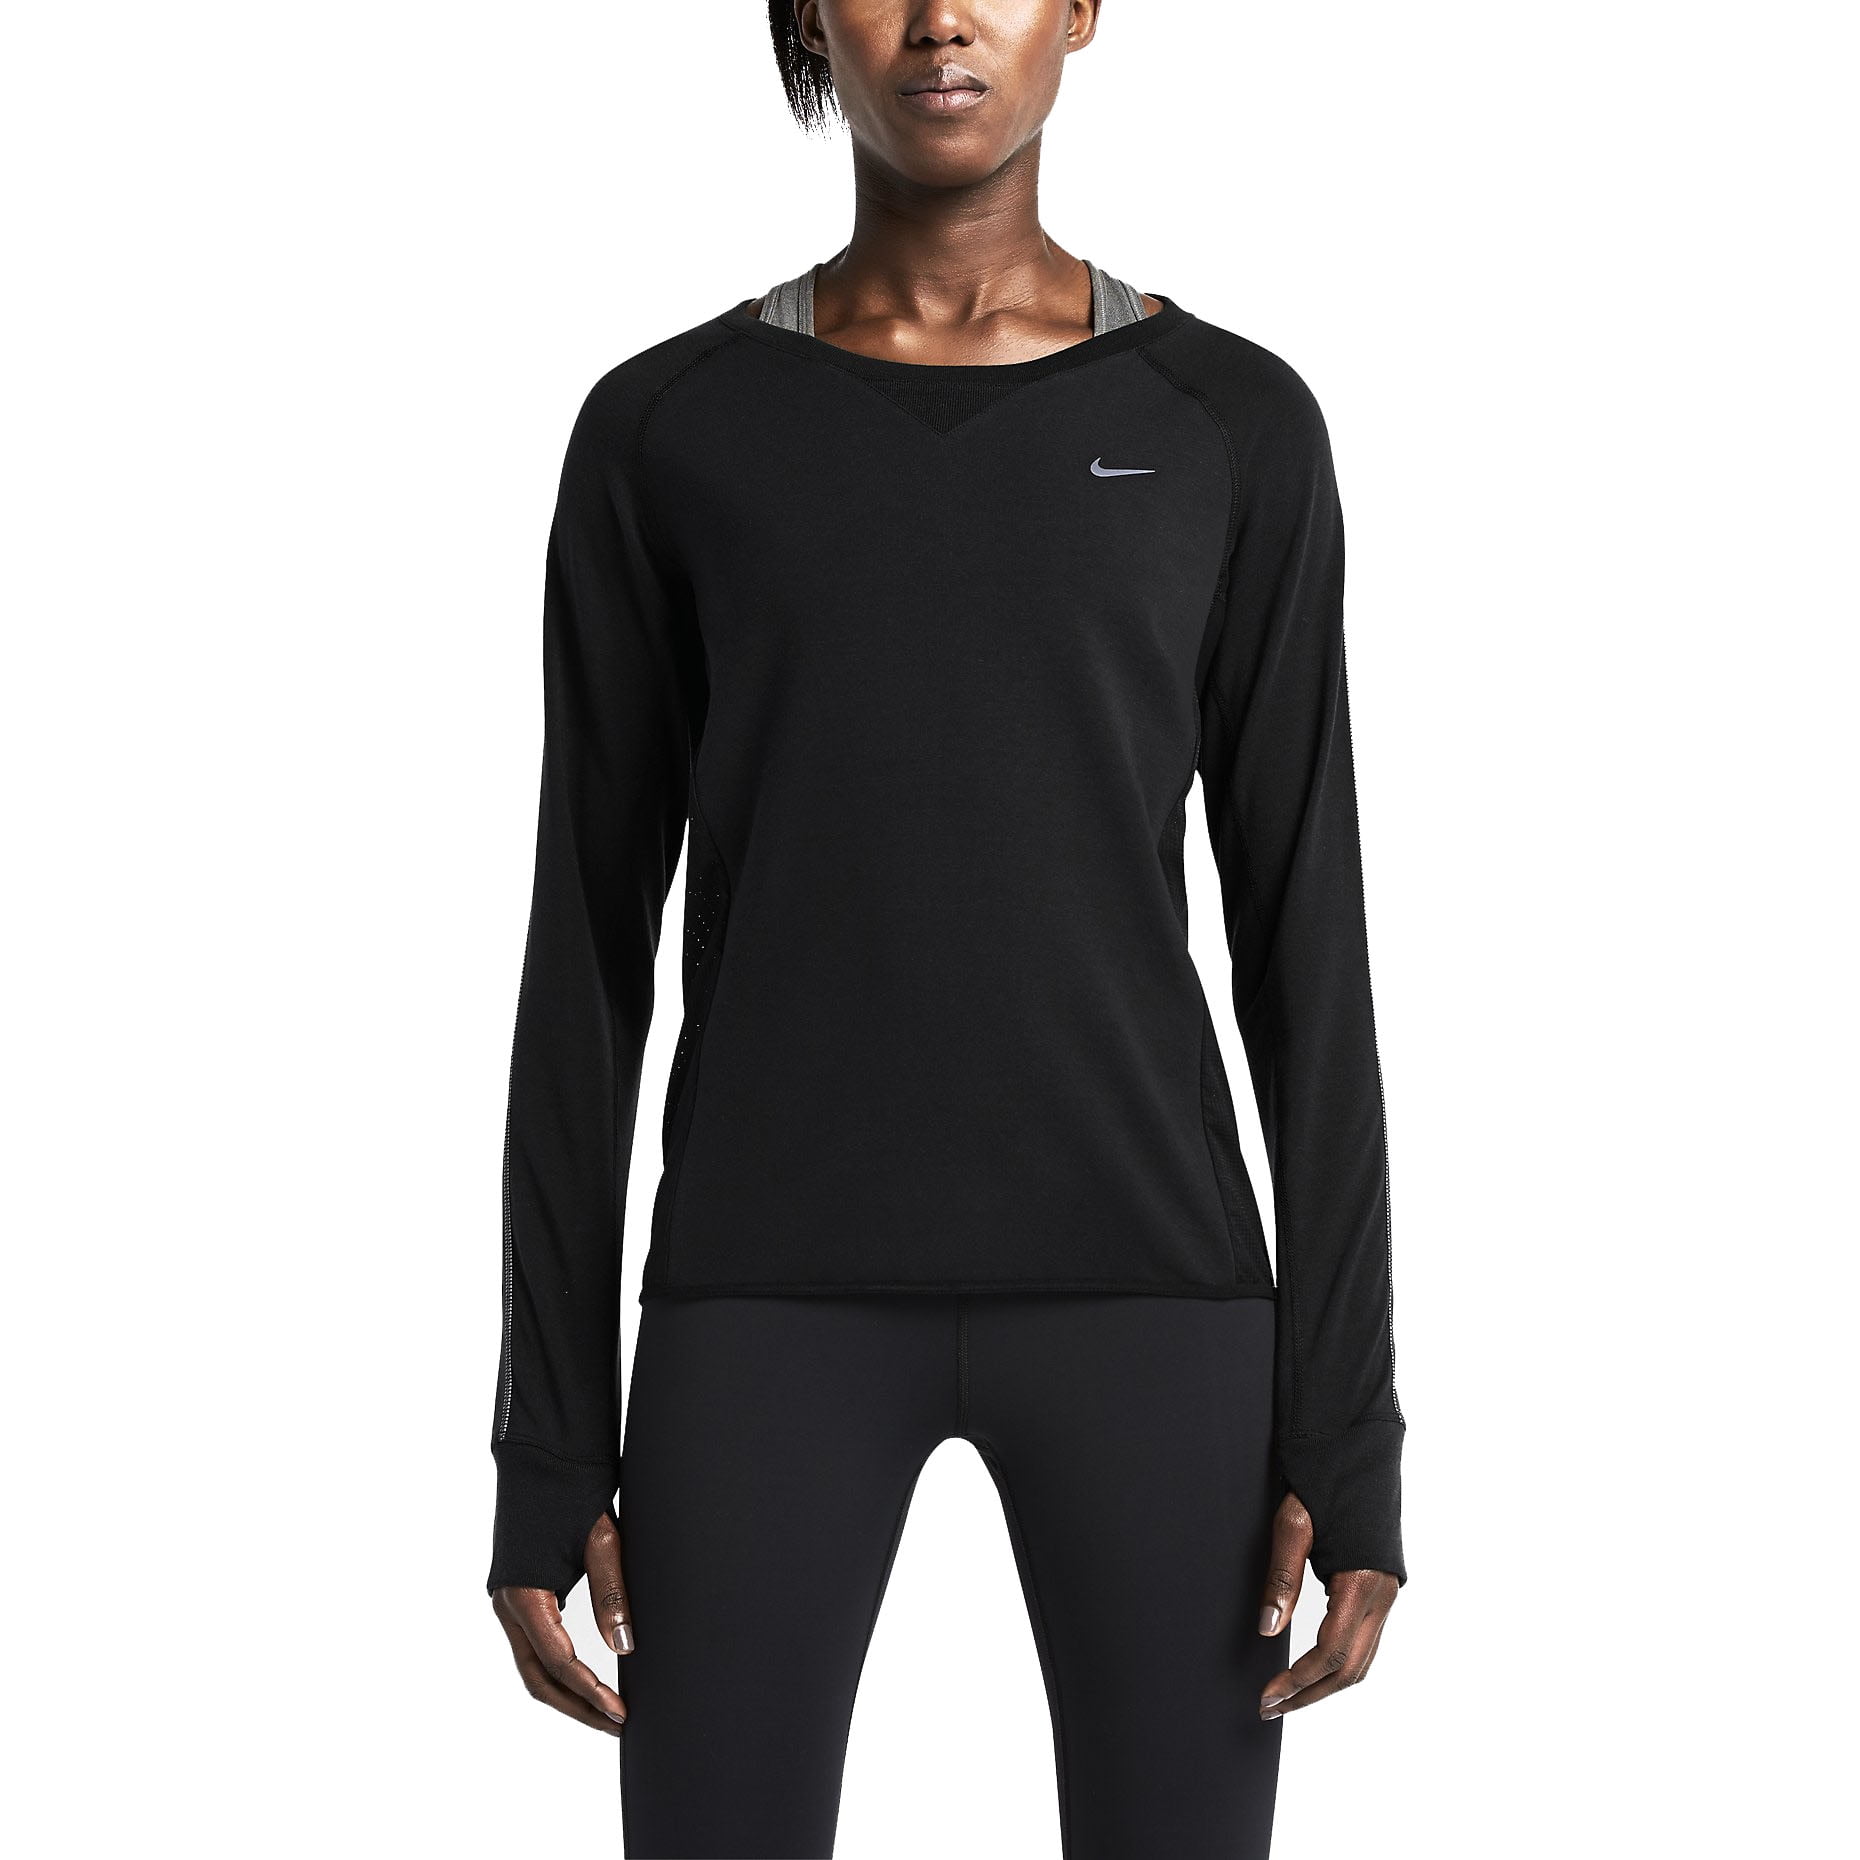 Nike - Nike Women's Dri-Fit Sprint Crew Running Shirt - Walmart.com ...